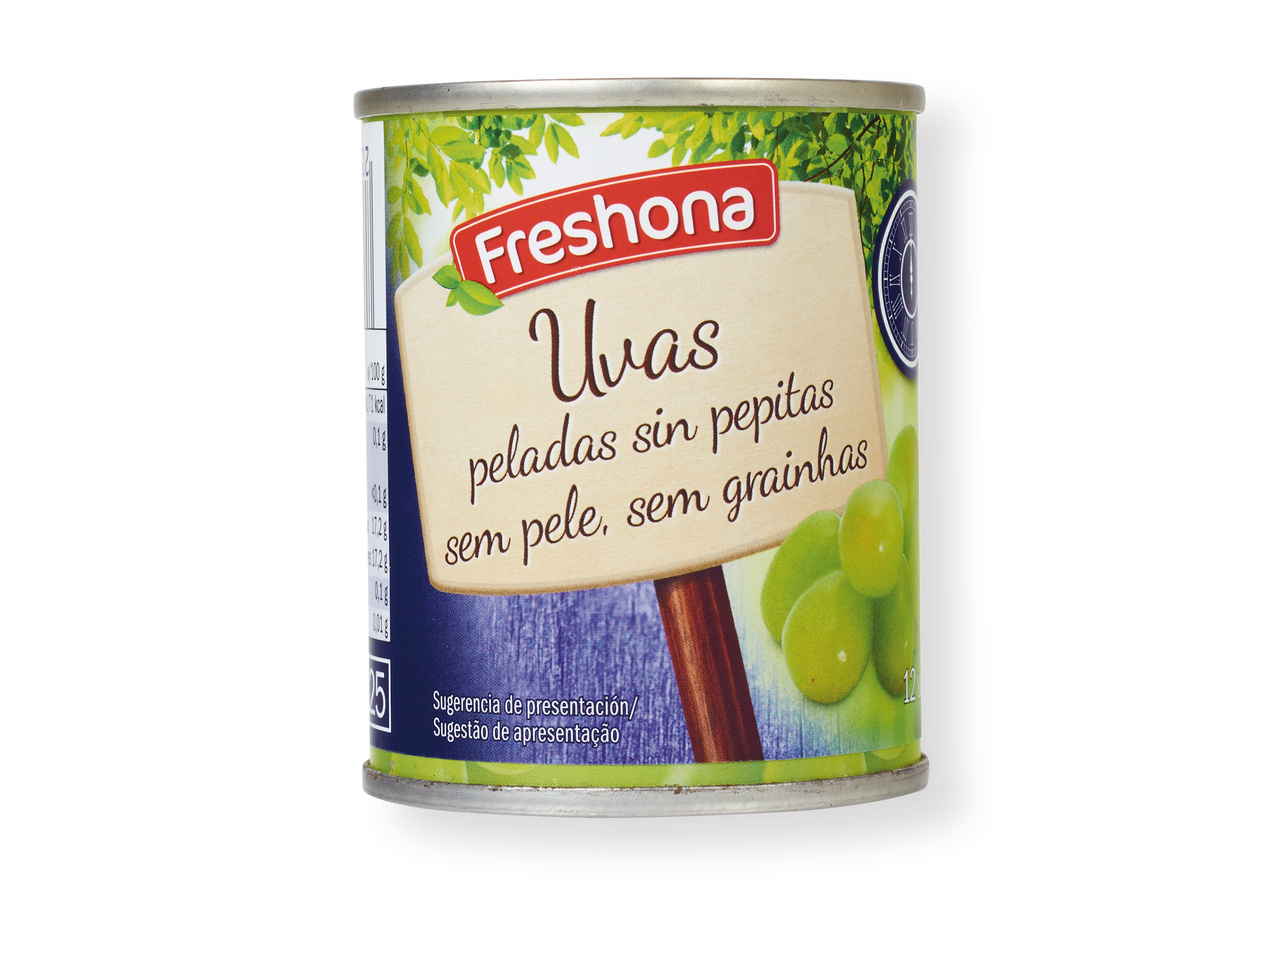 'Freshona(R)' Uvas sin pepitas